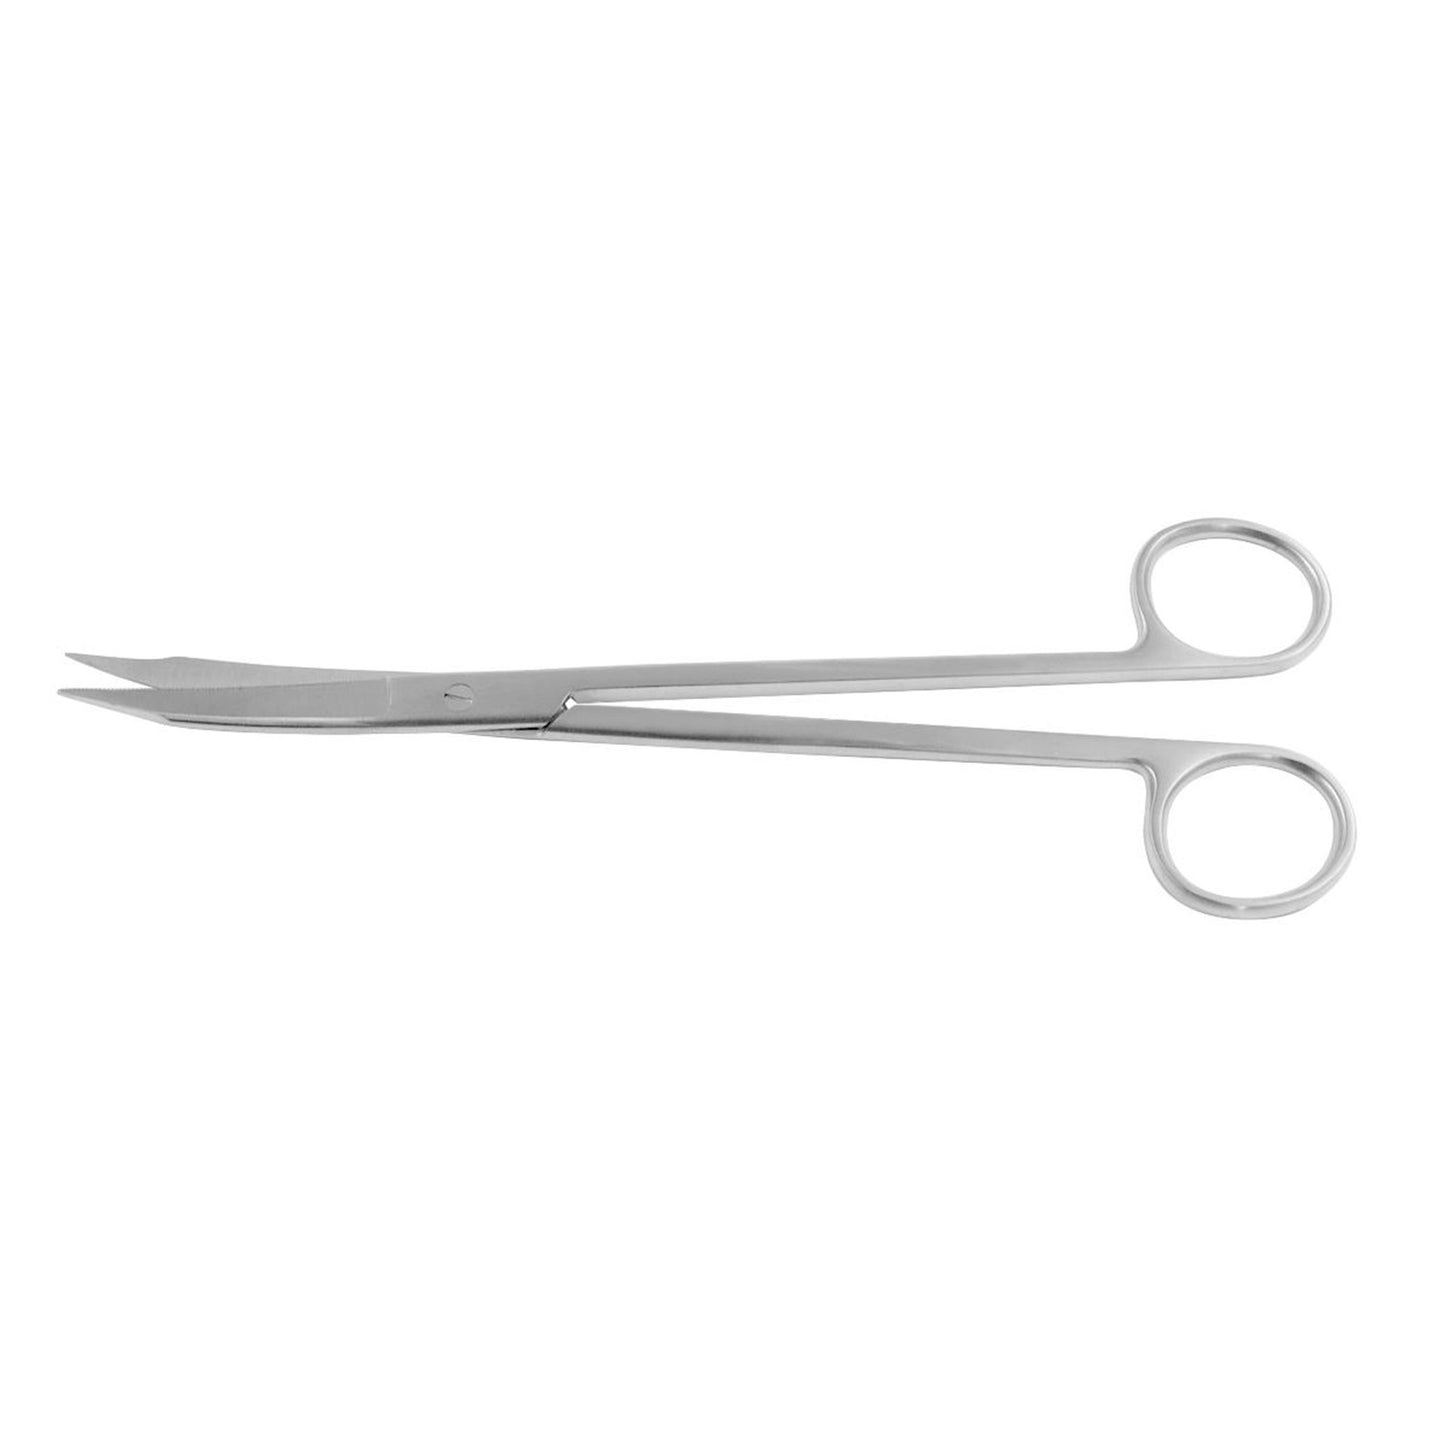 Martin Cartilage Scissors